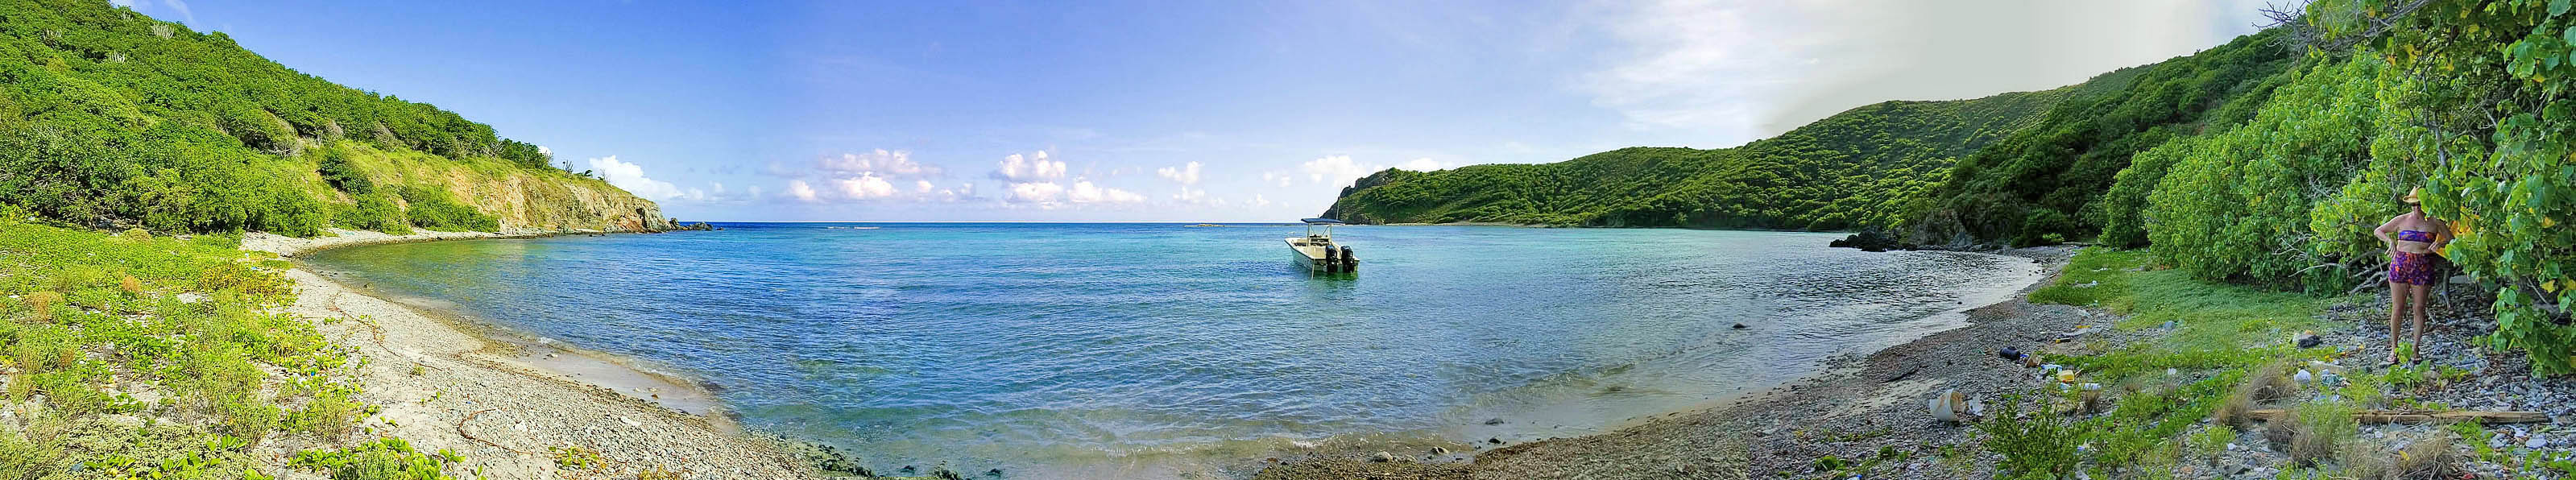 Panorama of West Money Bay, Norman Island